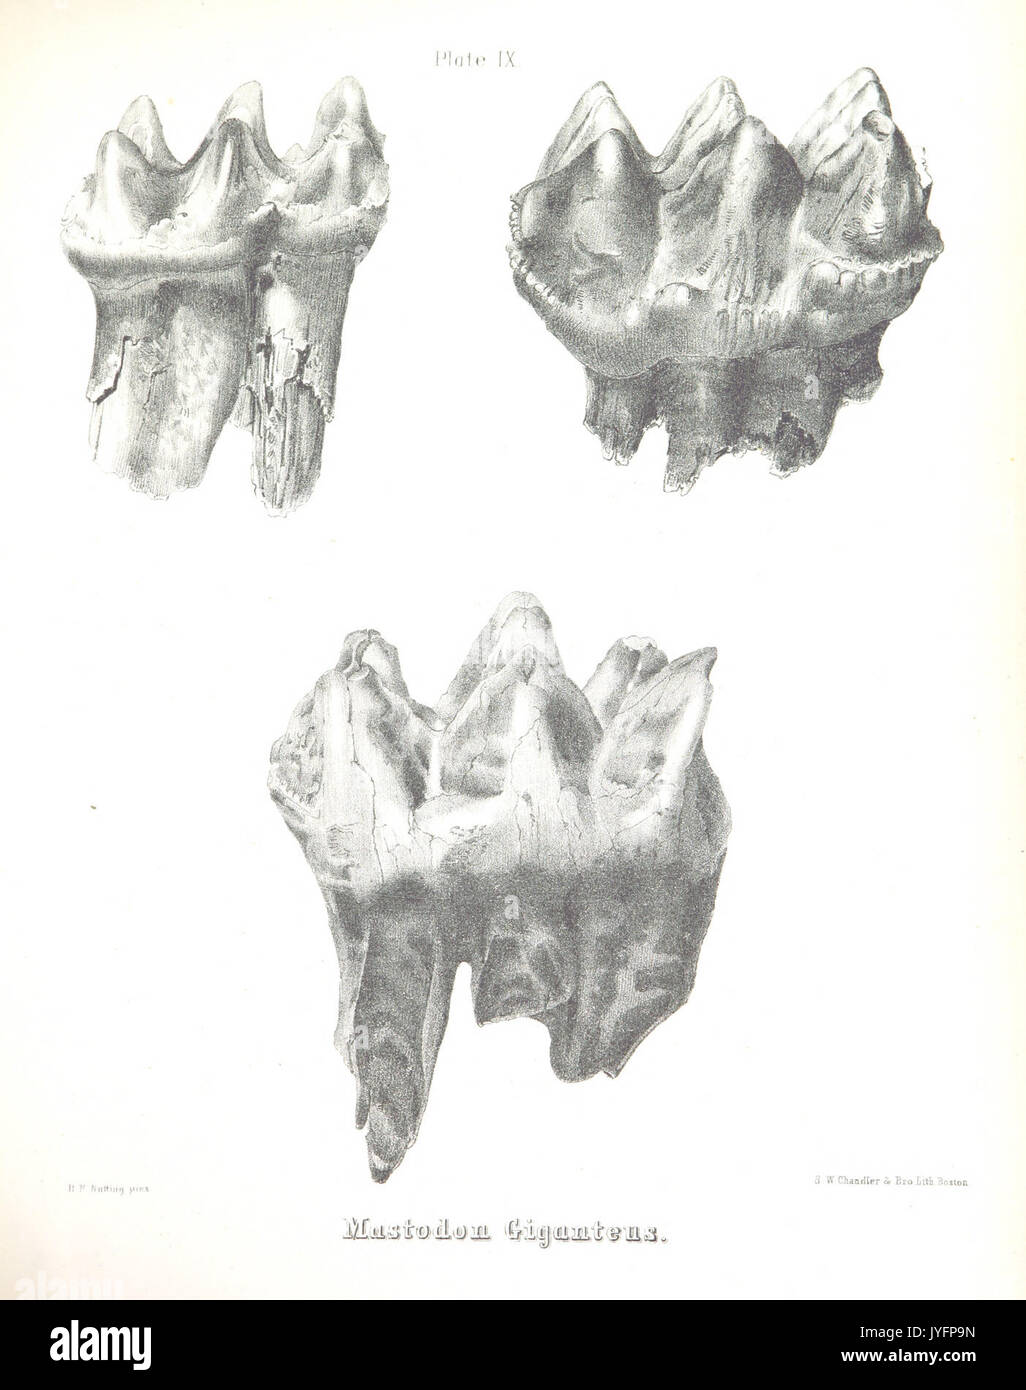 WARREN(1855) Mastodon Giganteus, Plate 9   p293 Stock Photo